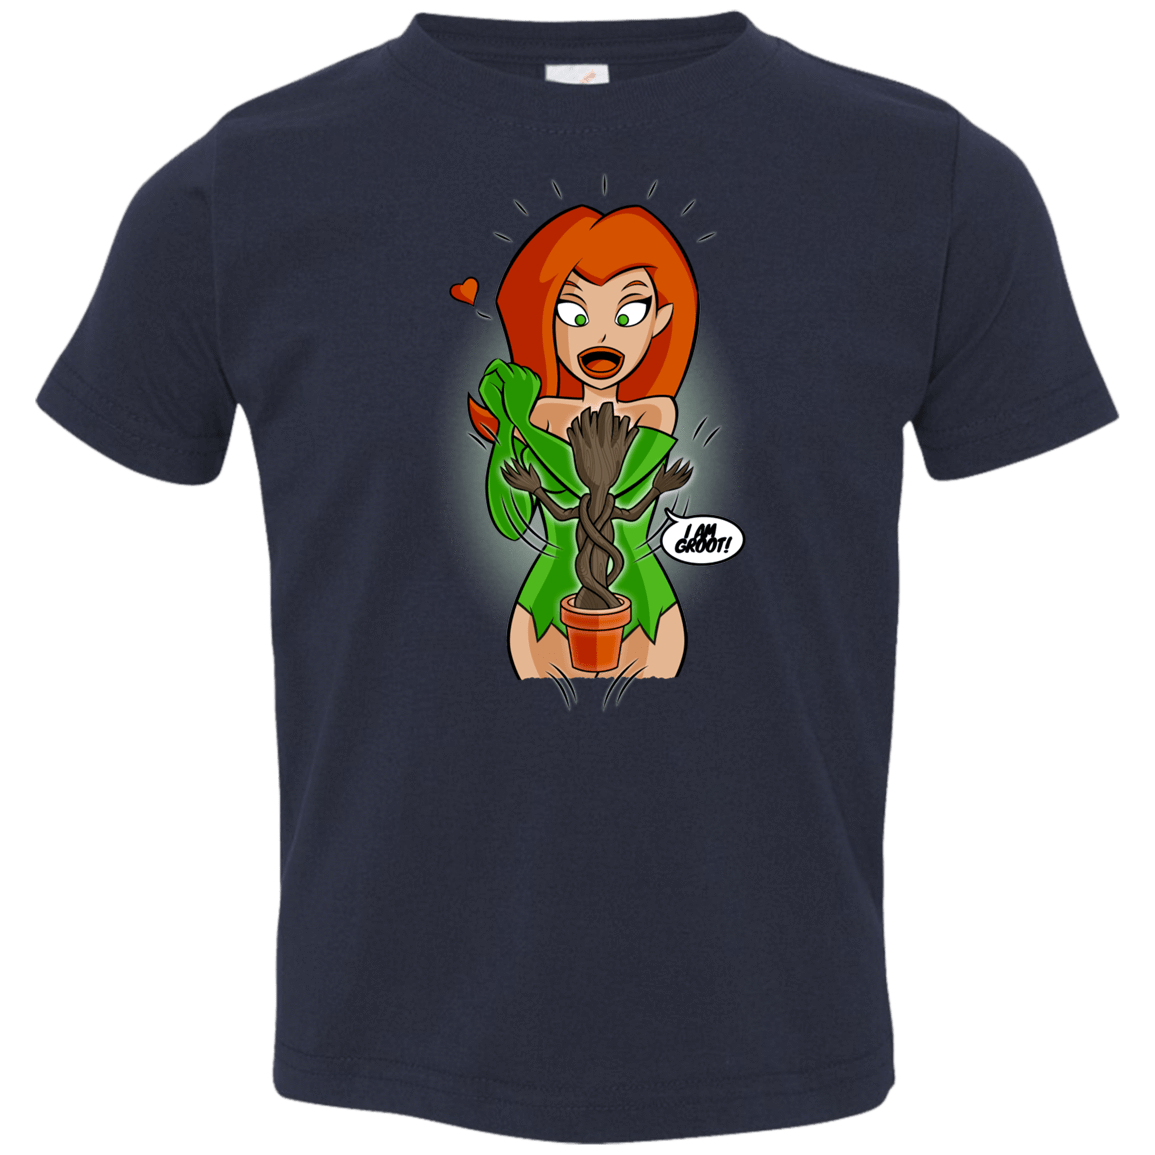 T-Shirts Navy / 2T Ivy&Groot Toddler Premium T-Shirt